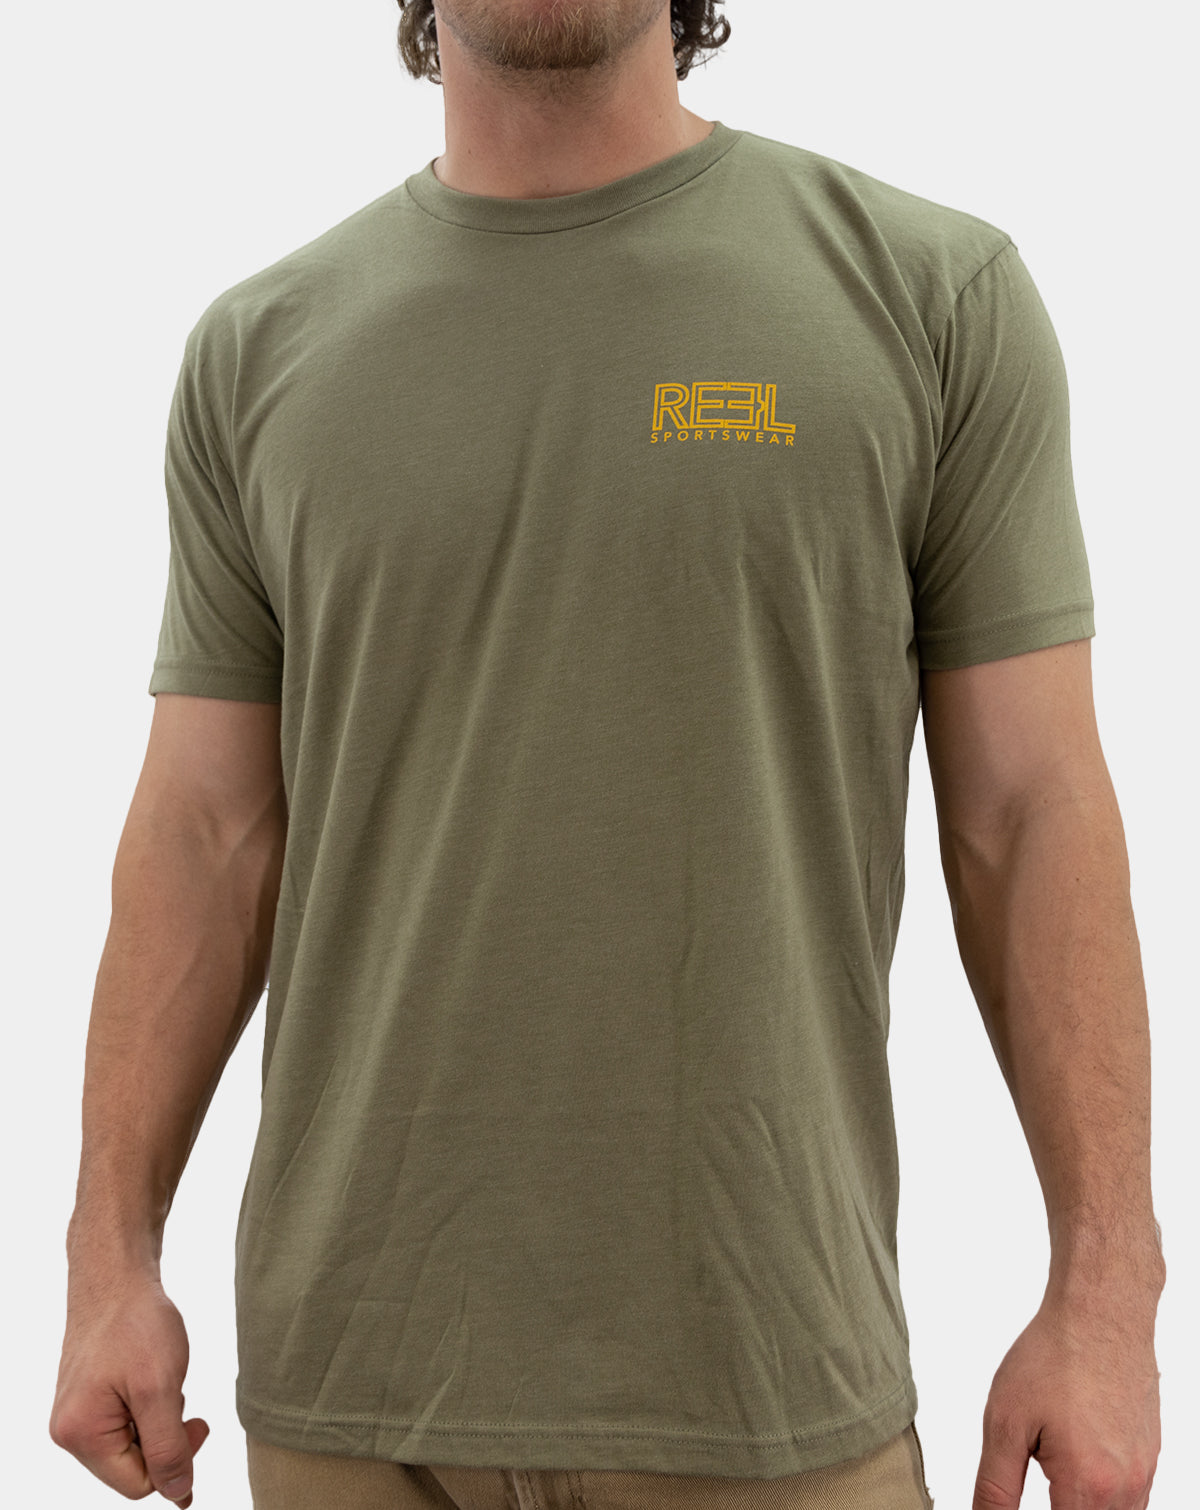 Fish all Day fishing t-shirt - Reel Sportswear